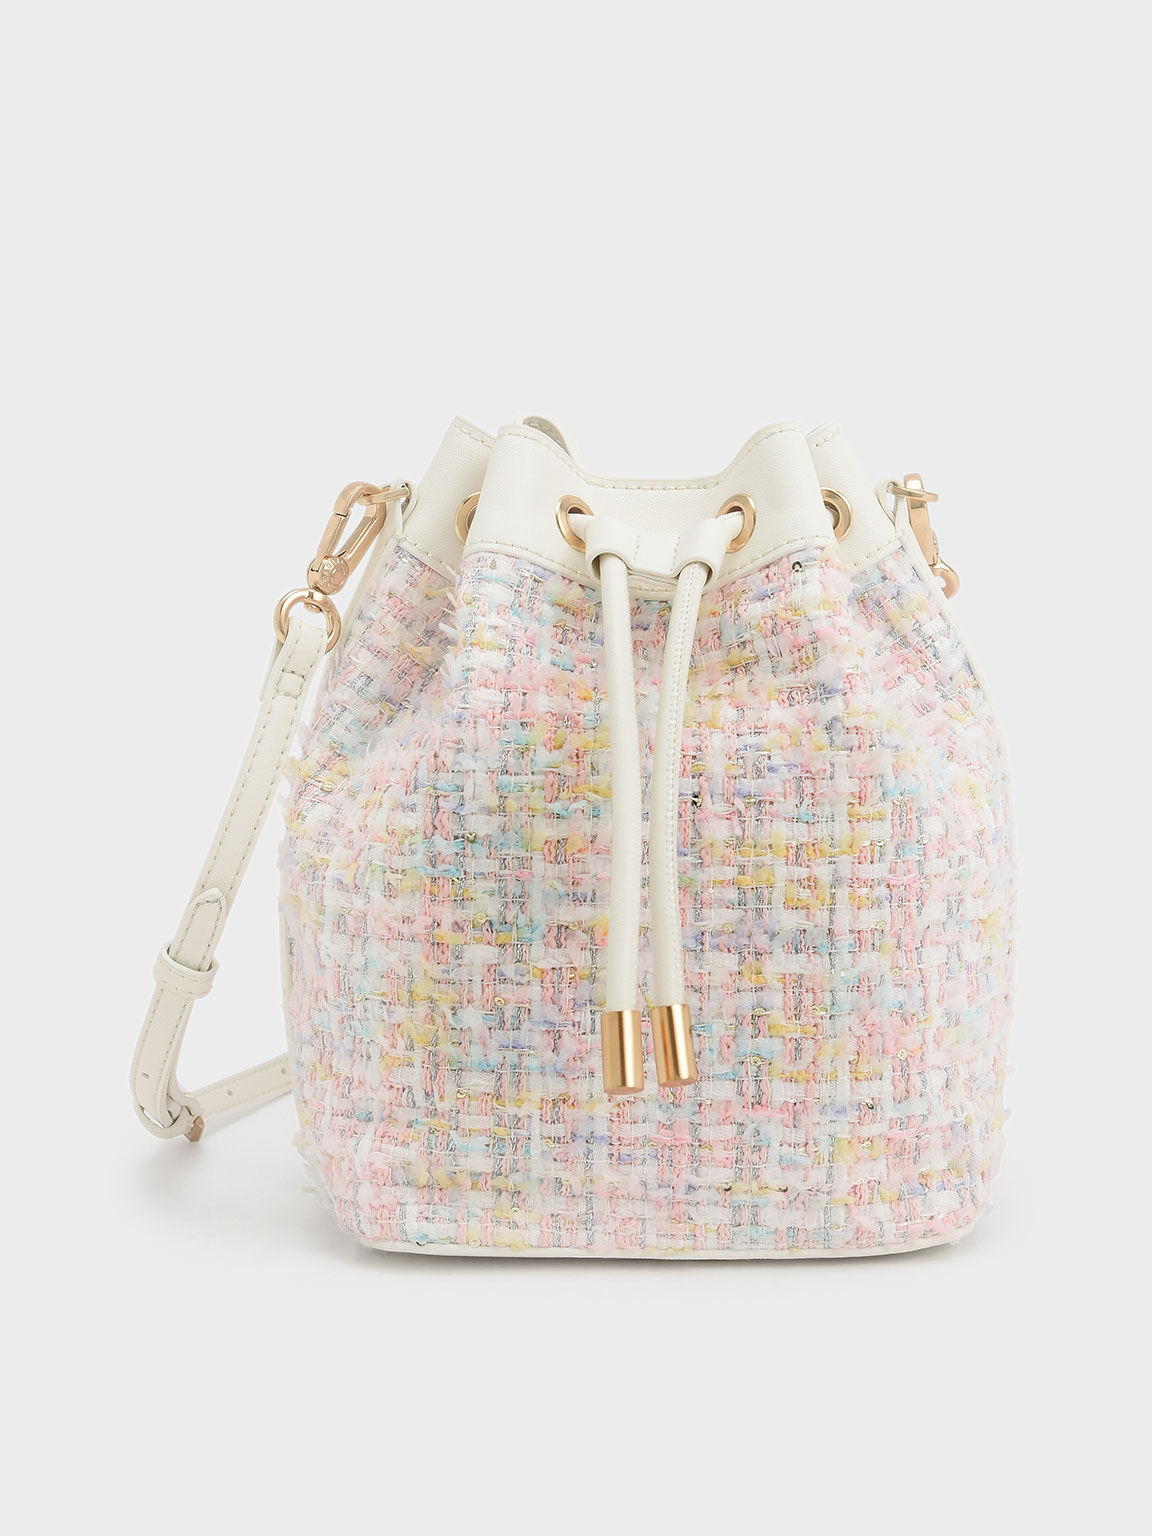 Chanel Drawstring Bucket Bag, Pink Tweed, New in Box WA001